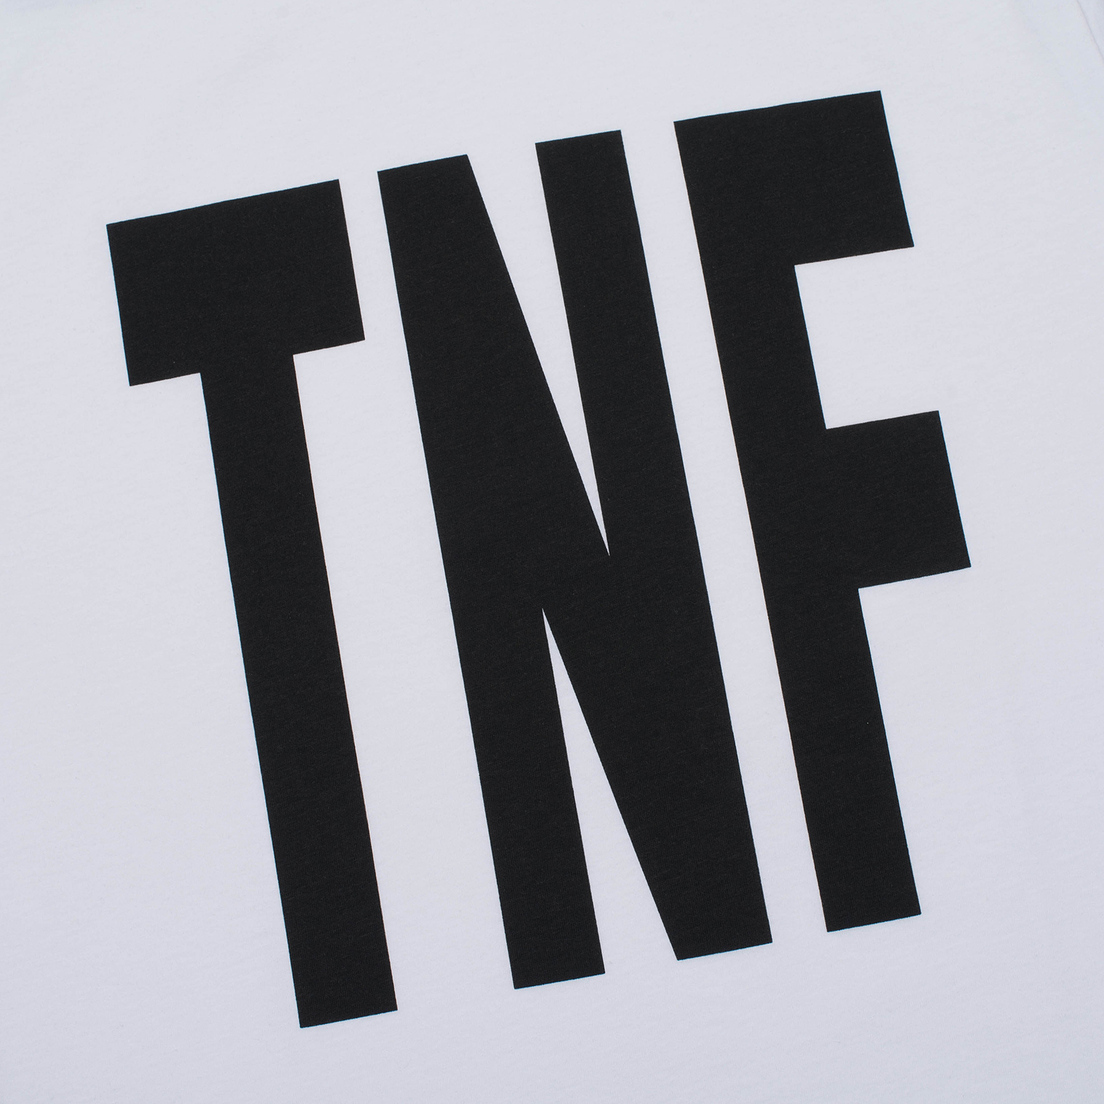 The North Face Мужская футболка TNF SS